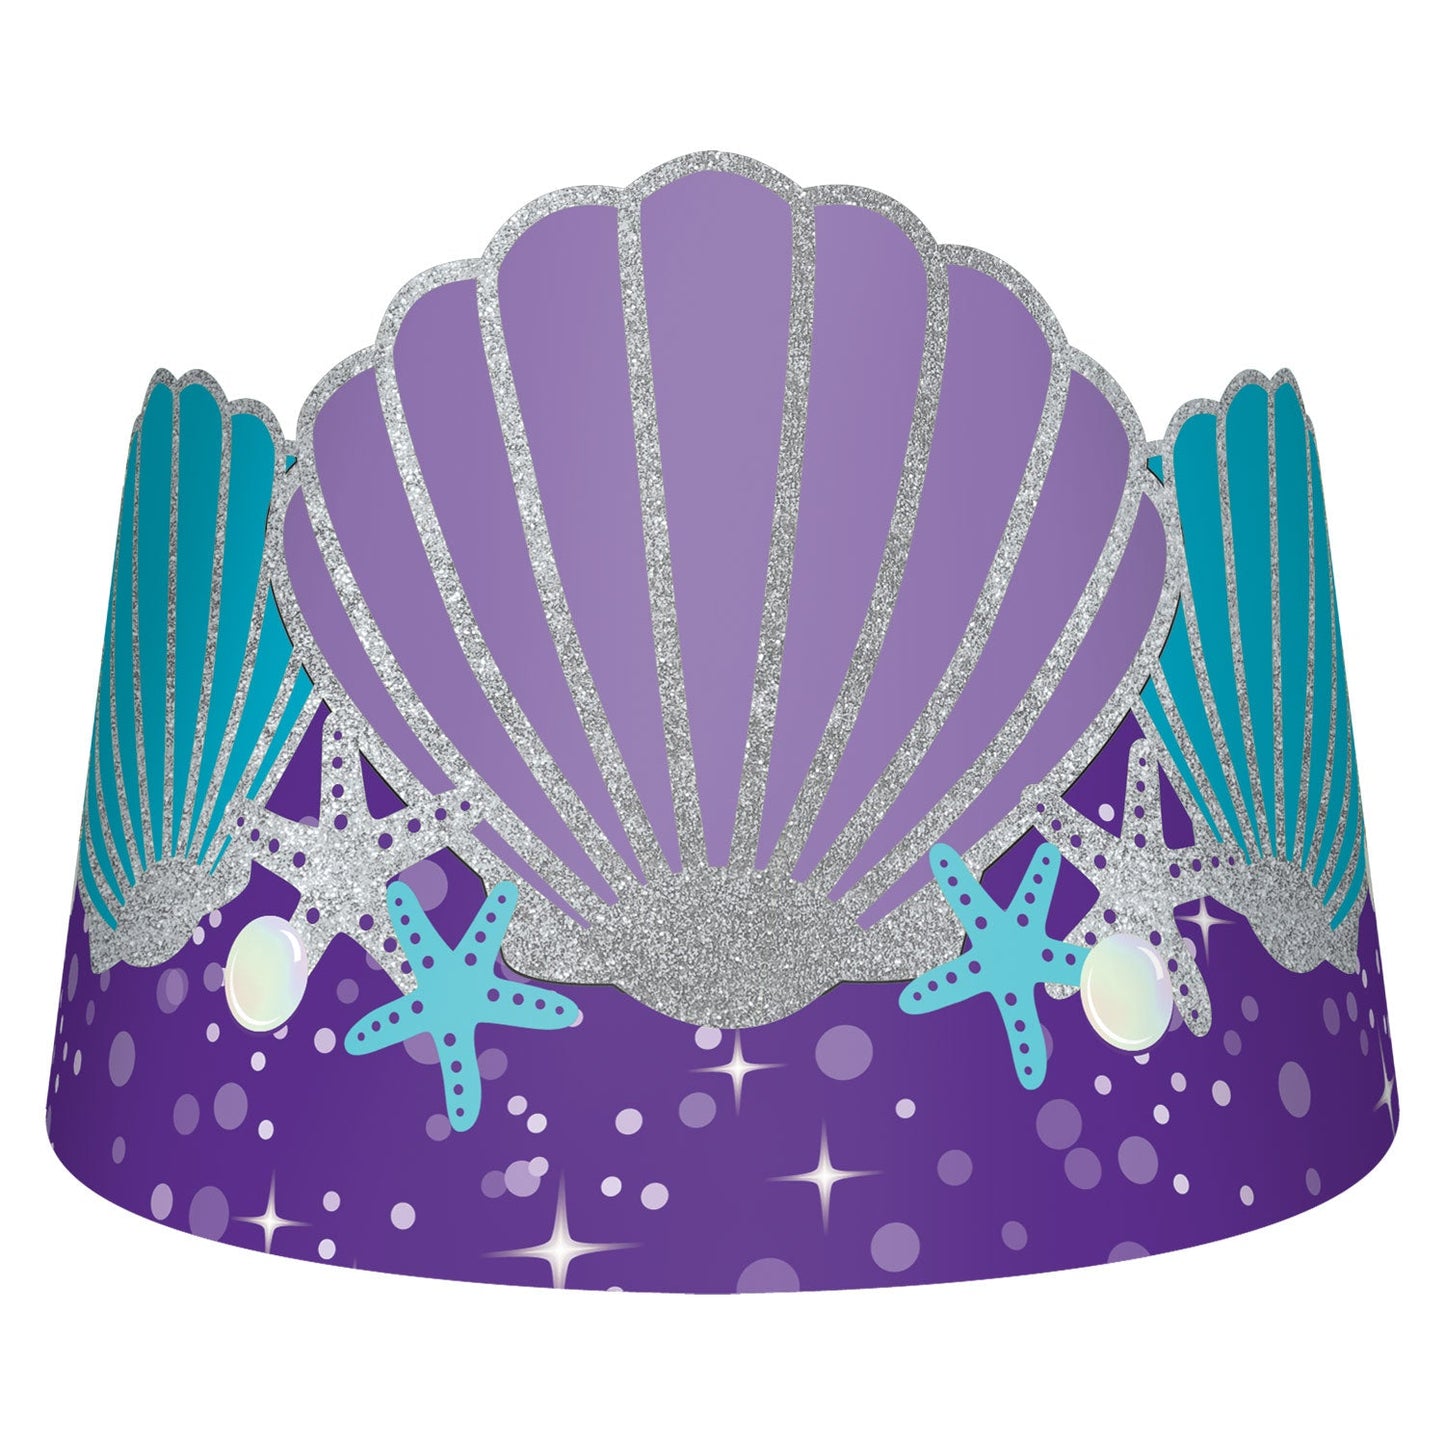 Mermaid Wishes Paper Crowns